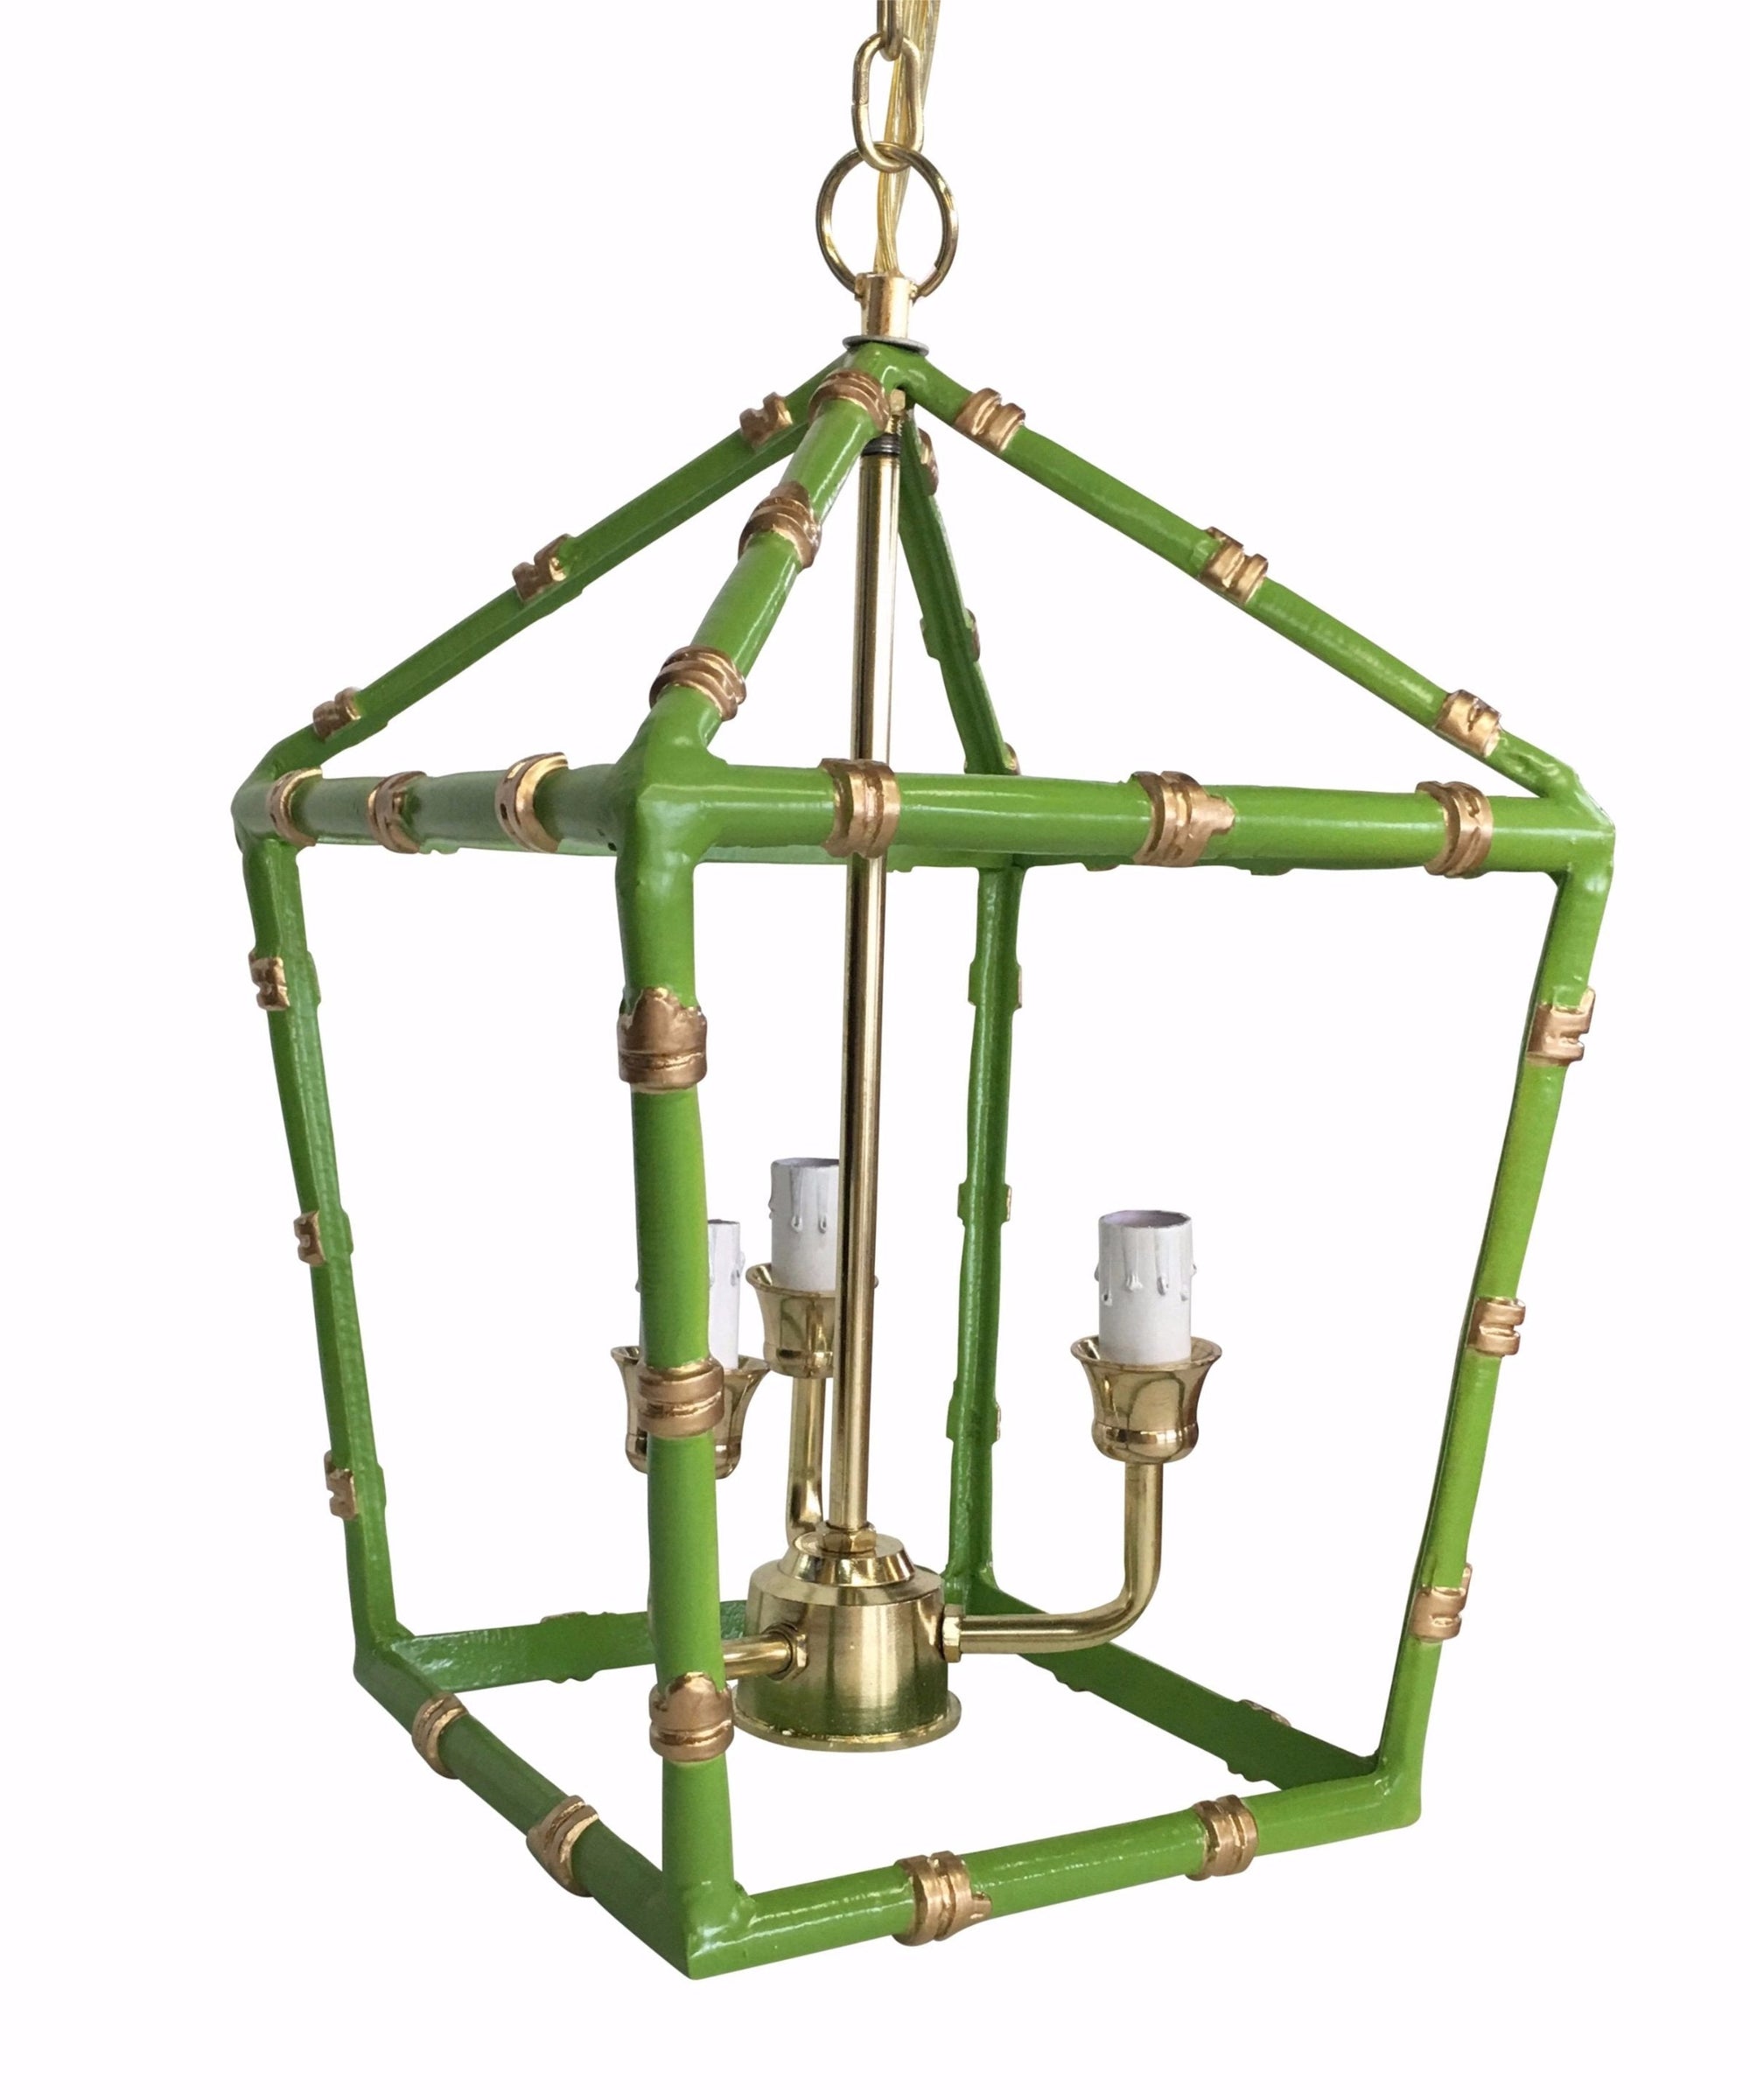 Dana Gibson Small Bamboo Lantern in Green, 2ndQ